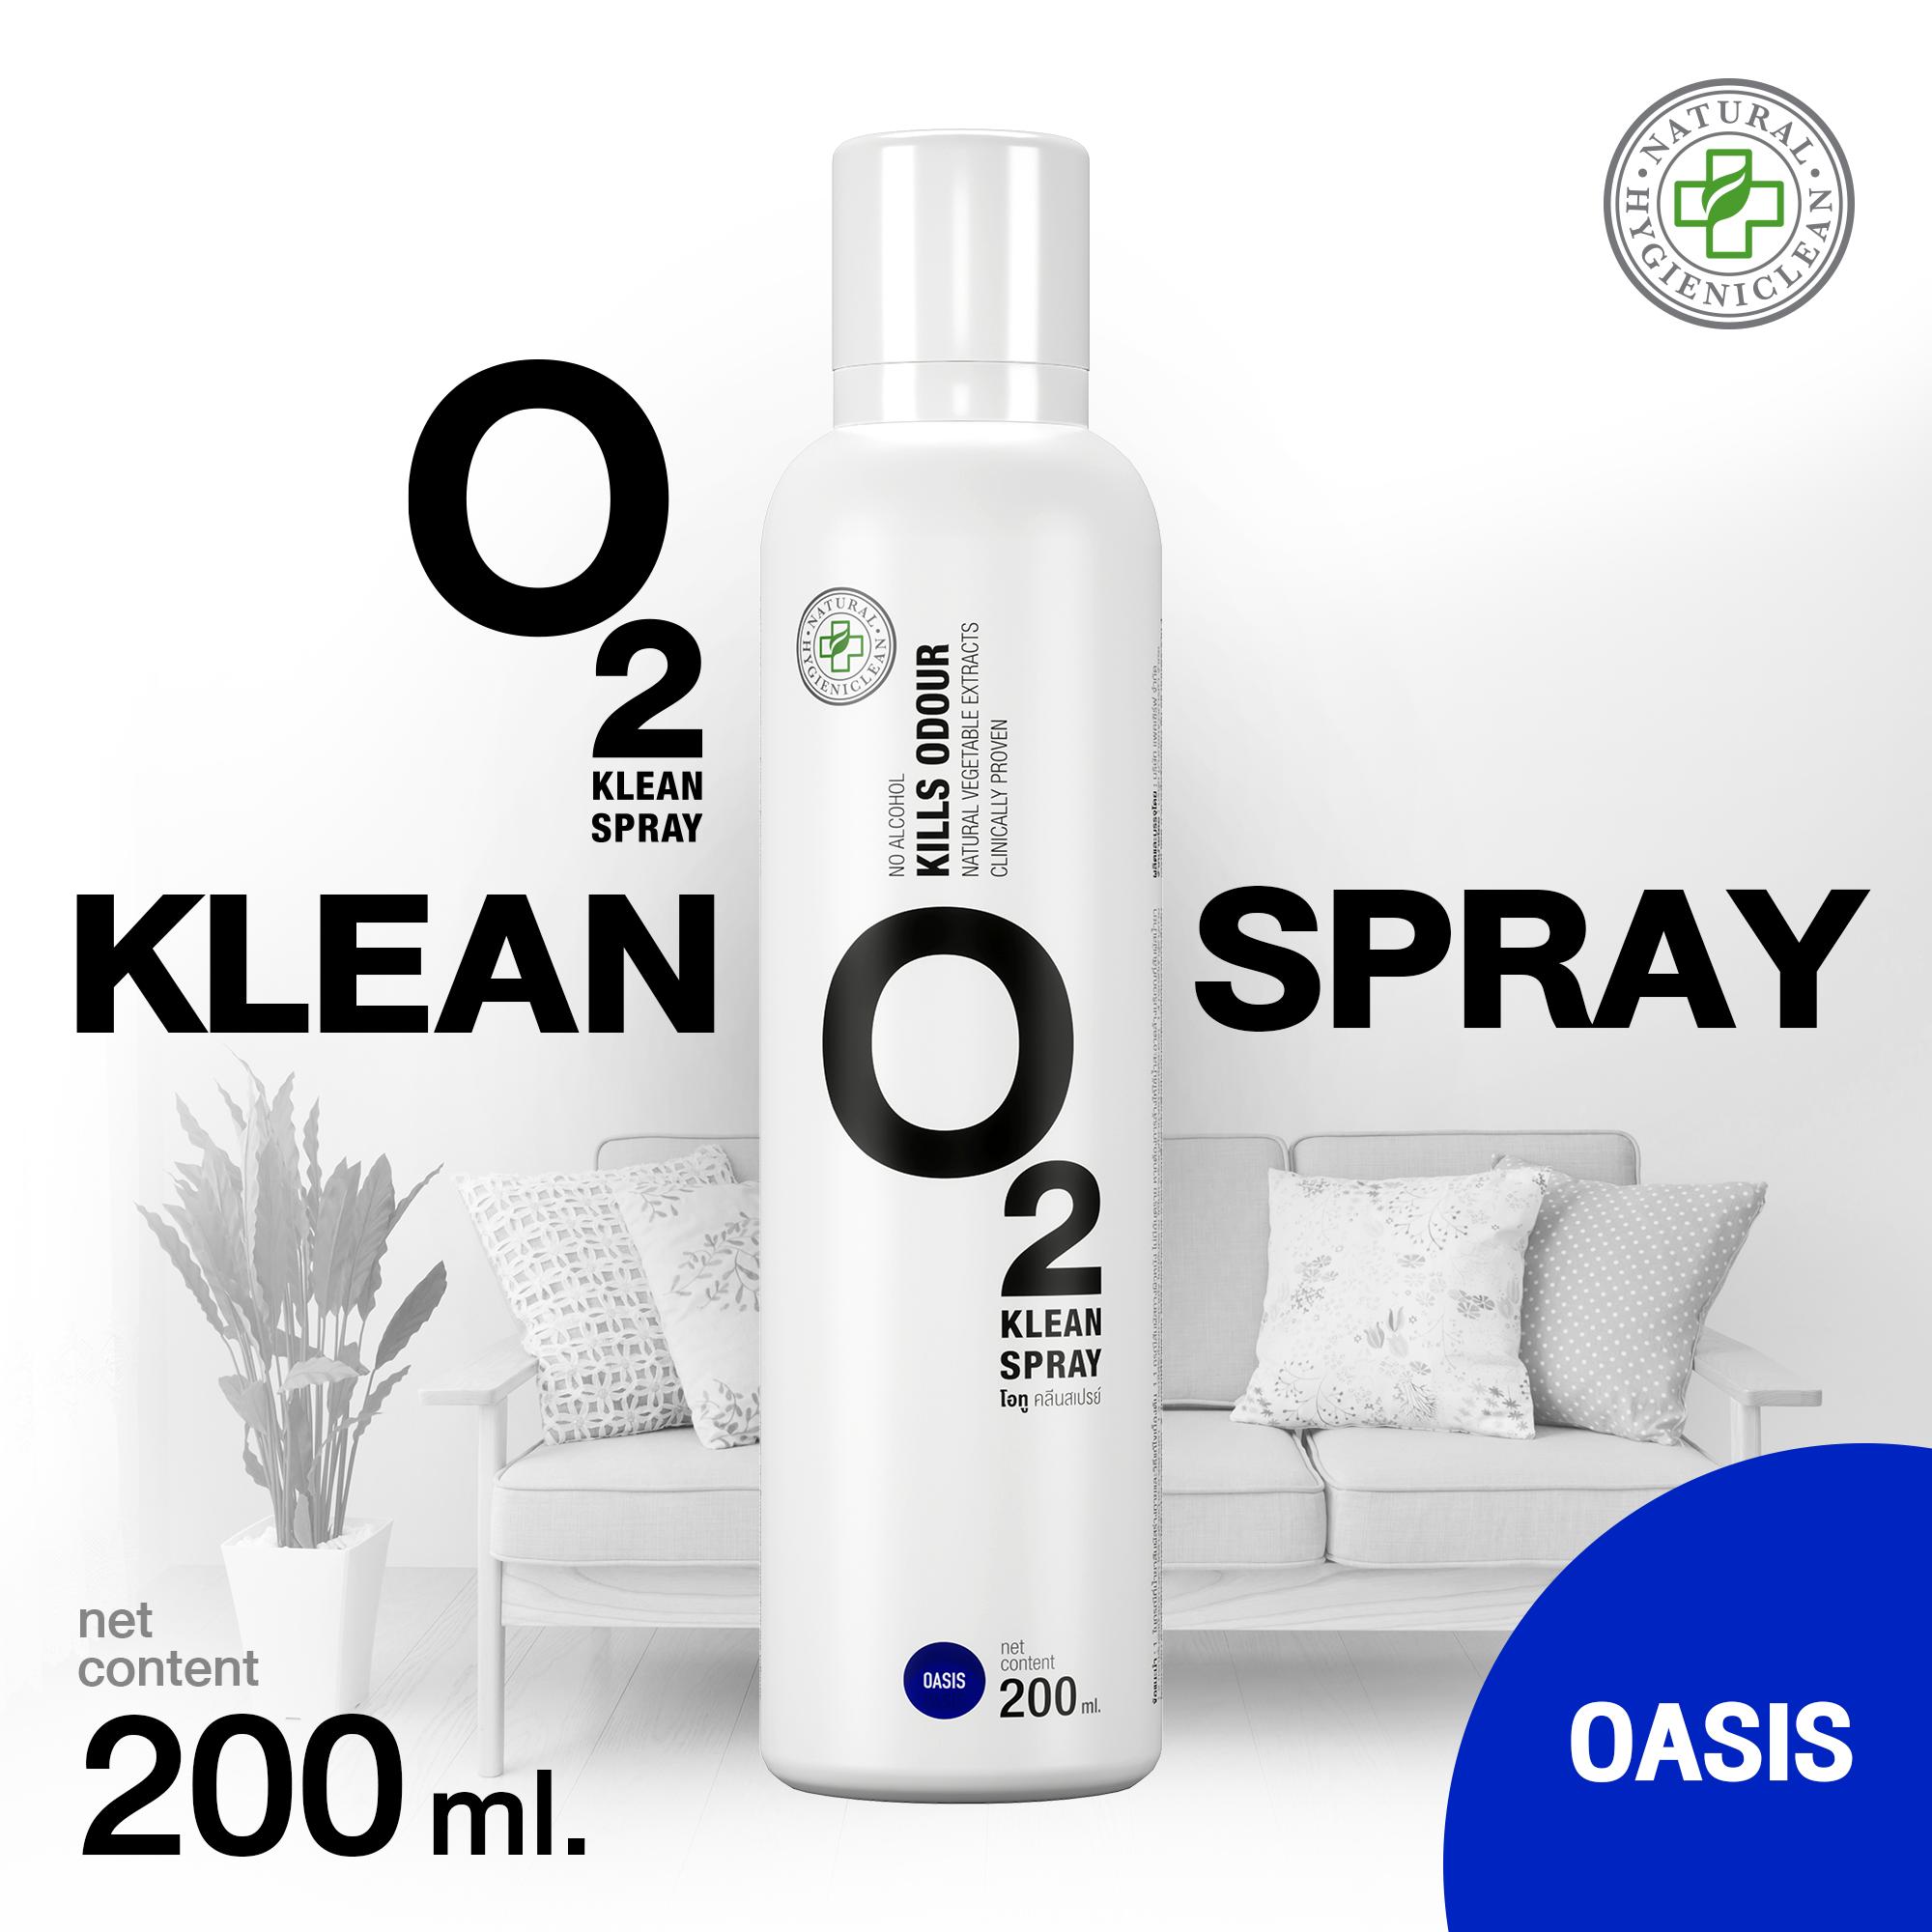 O2 Klean Spray - 200 ml - Oasis scent  สเปรย์ทำความสะอาด กำจัดกลิ่น จากสารสกัดธรรมชาติ